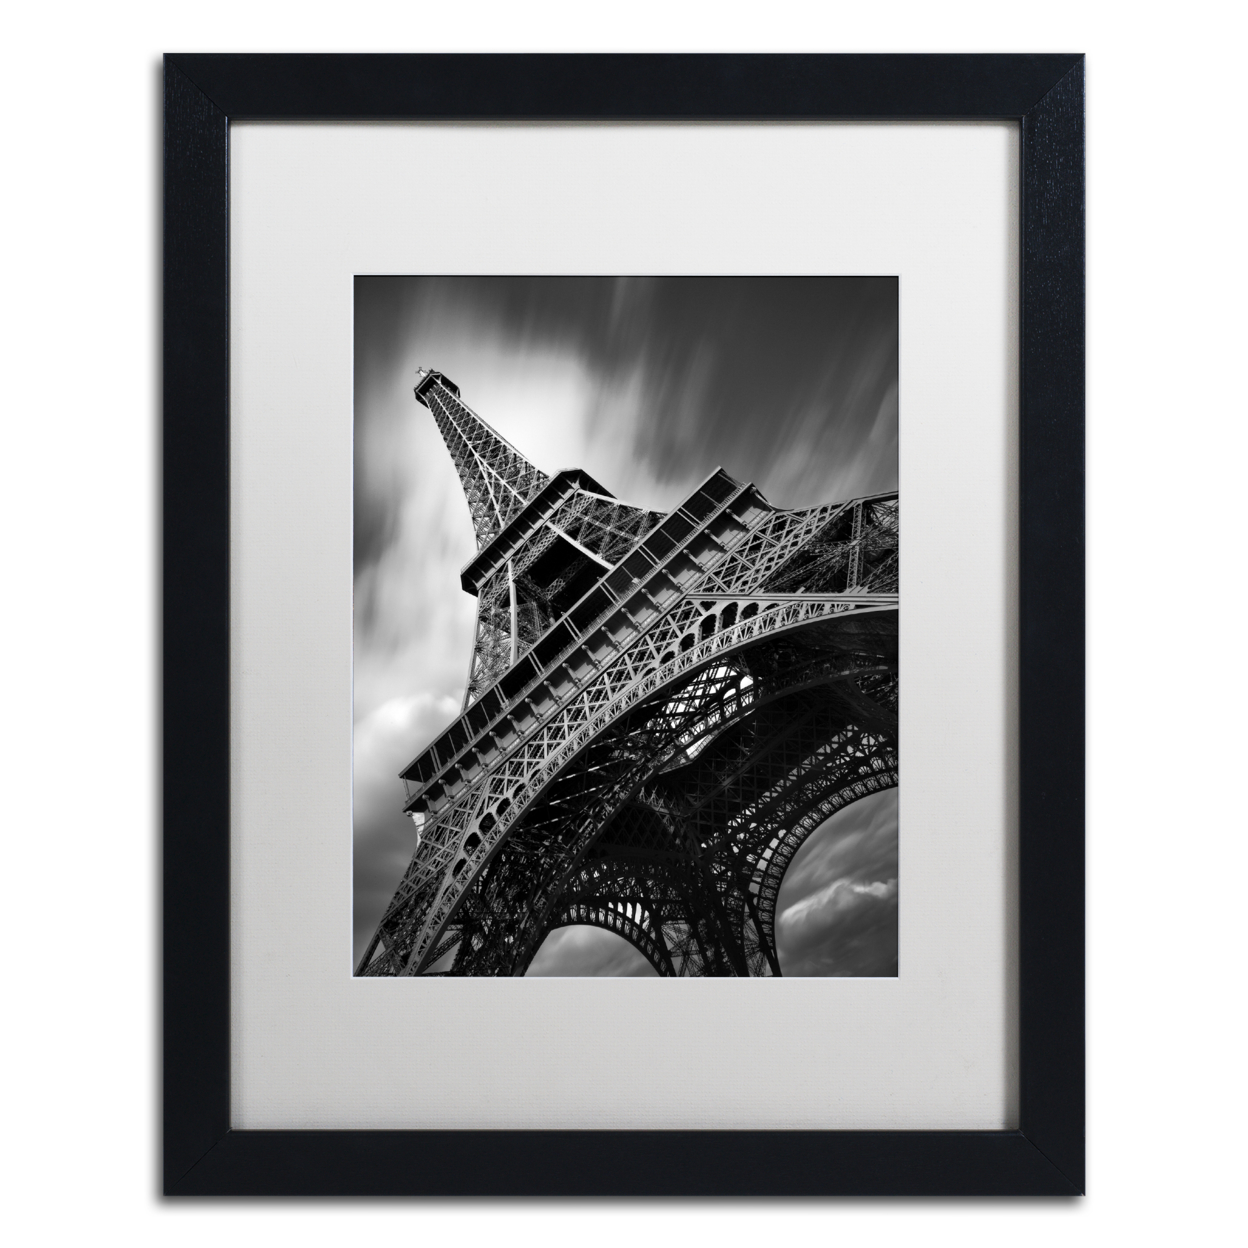 Moises Levy 'Eiffel Tower Study II' Black Wooden Framed Art 18 X 22 Inches